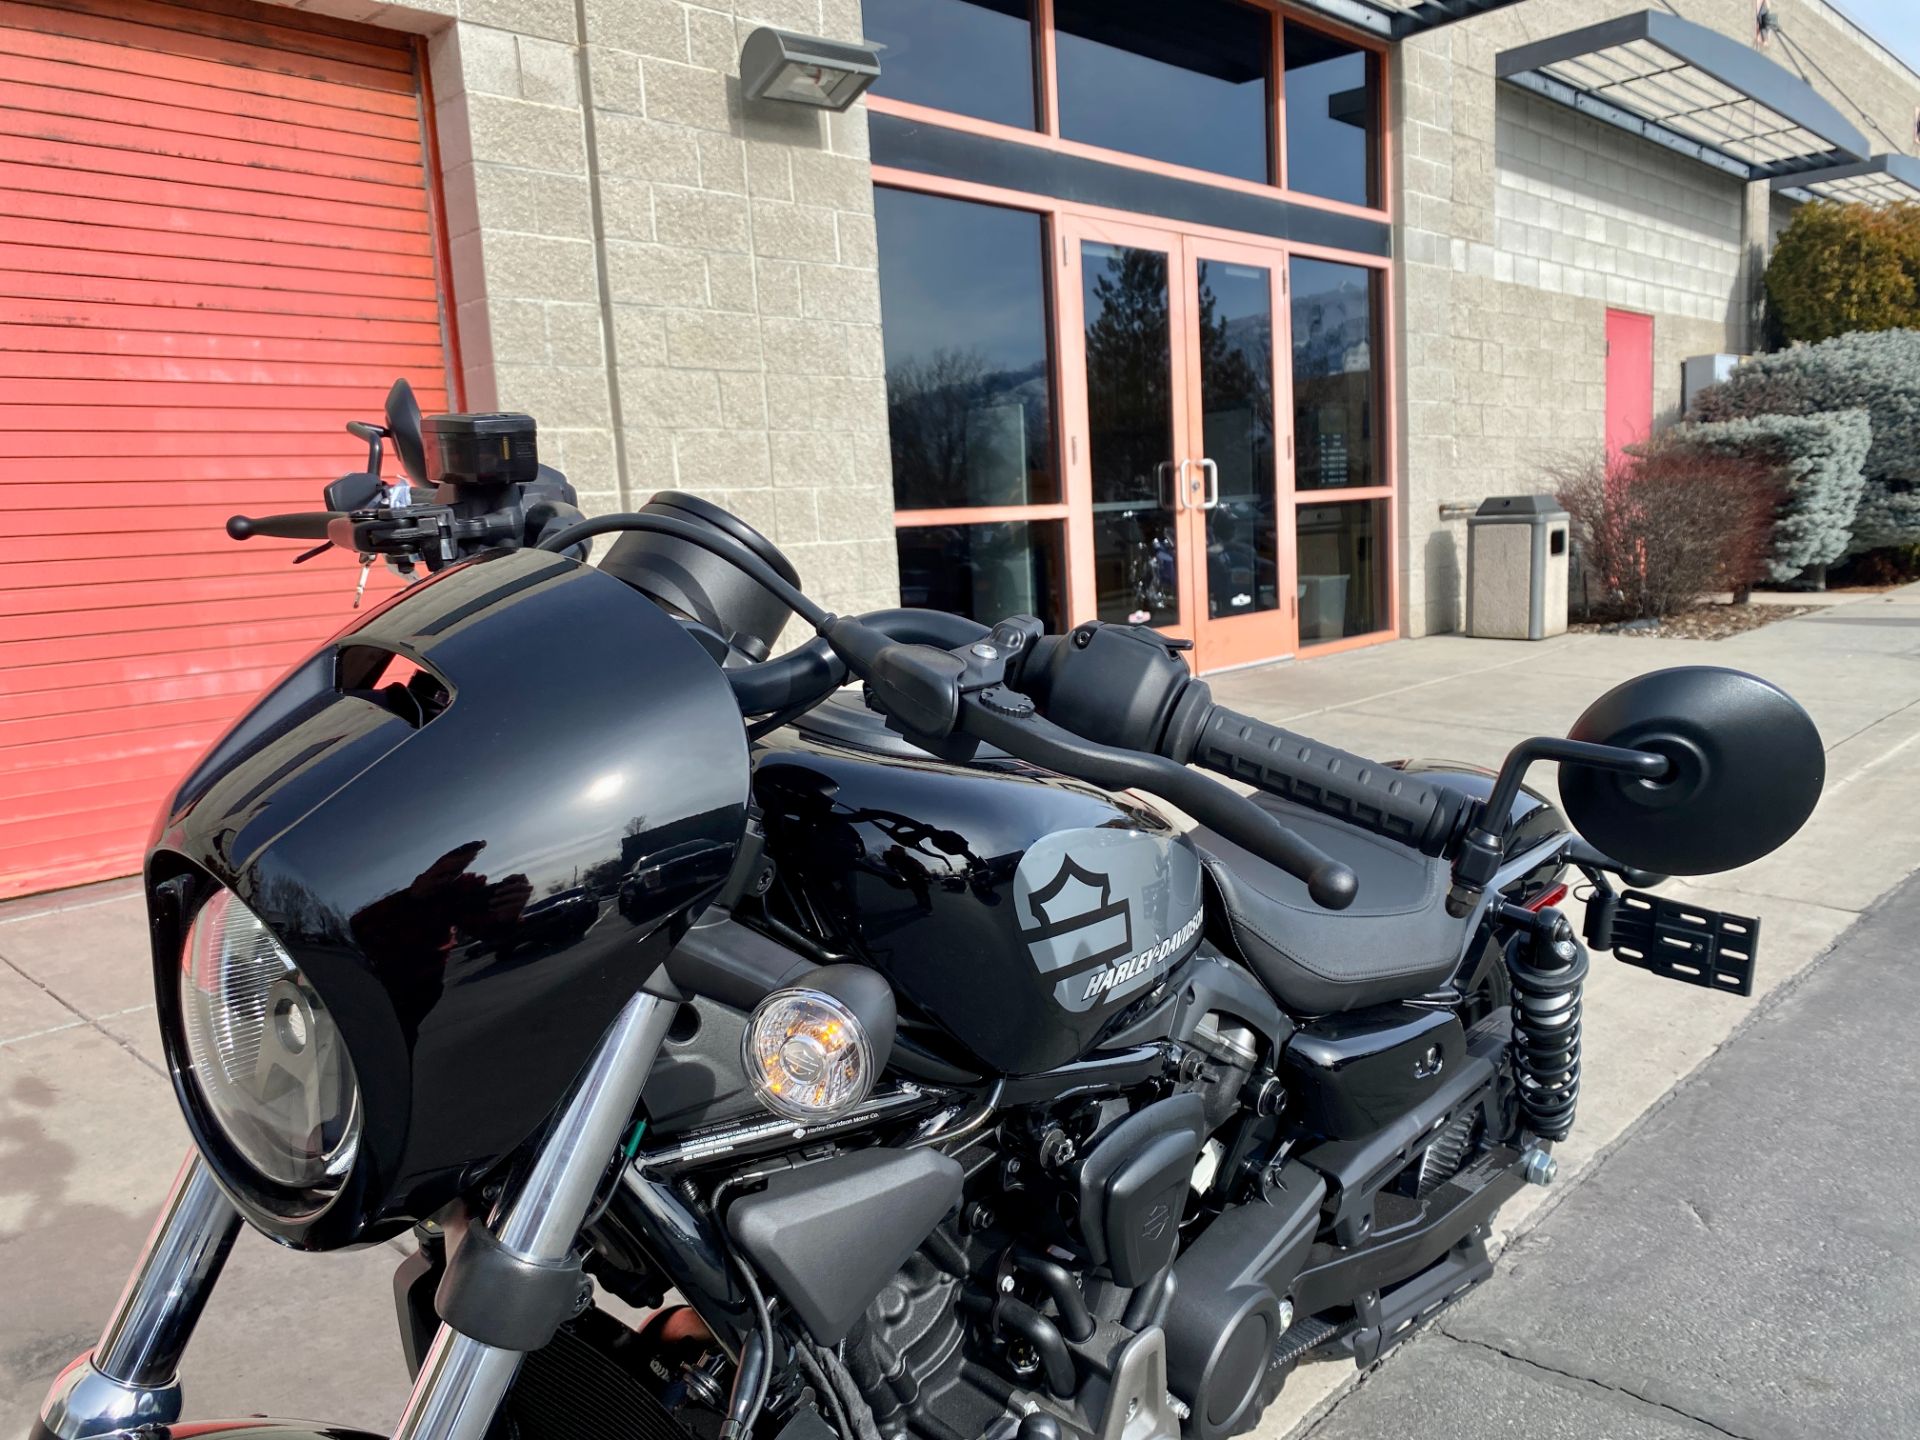 2022 Harley-Davidson Nightster™ in Sandy, Utah - Photo 9